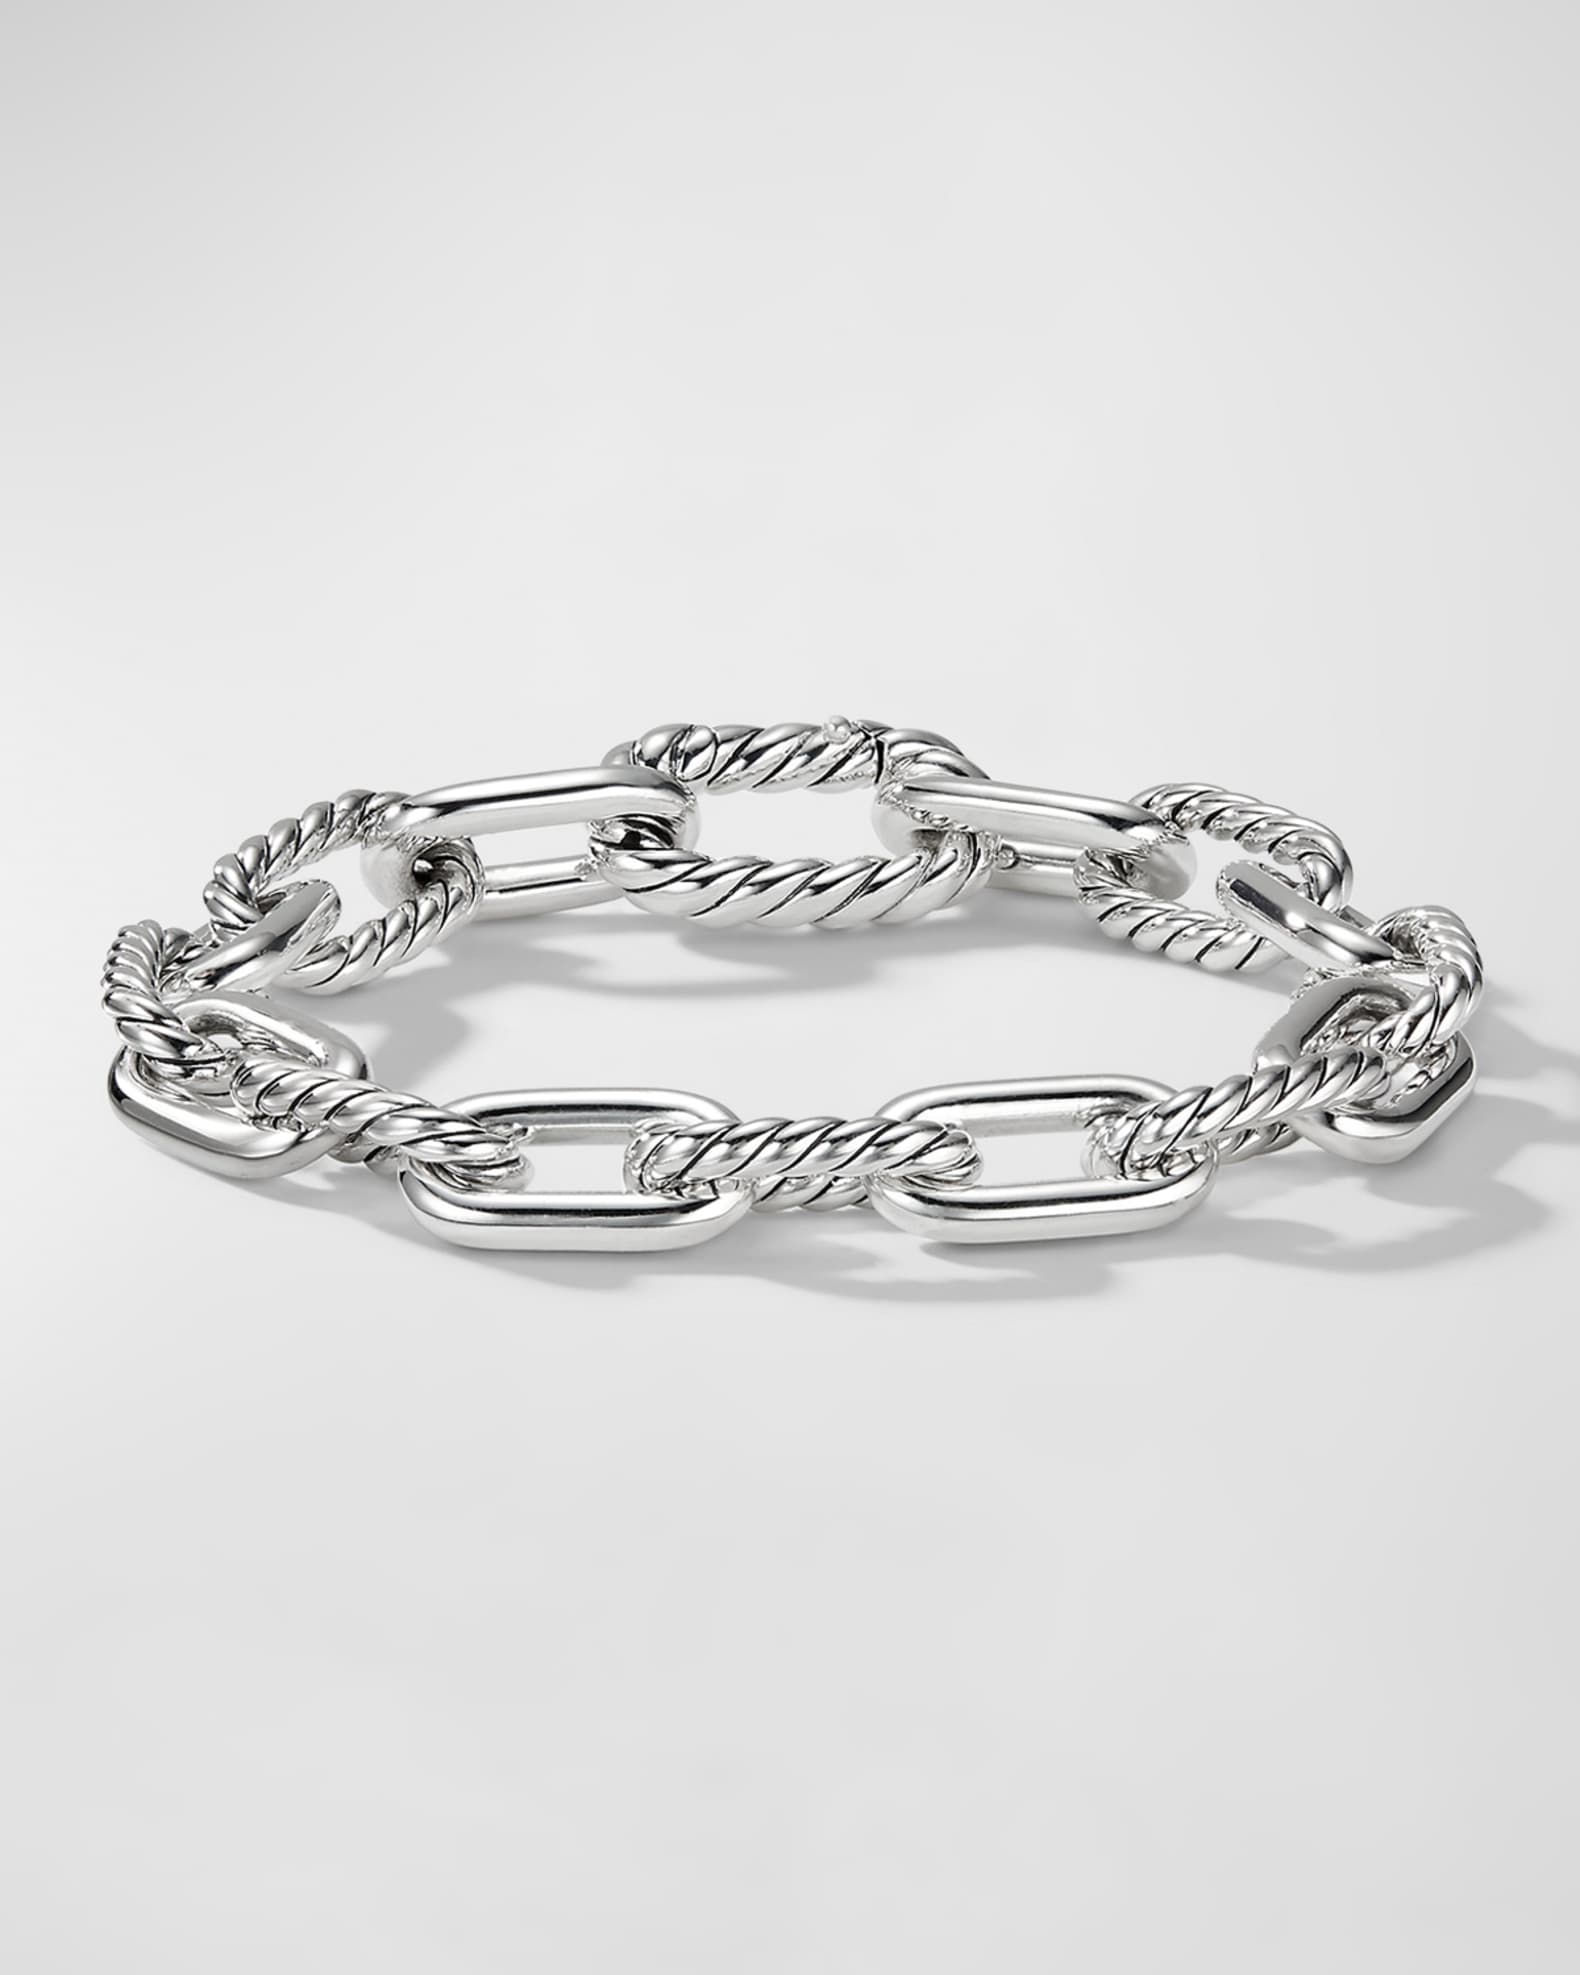 David Yurman DY Madison Chain Bracelet in Silver, 8.5mm | Neiman Marcus